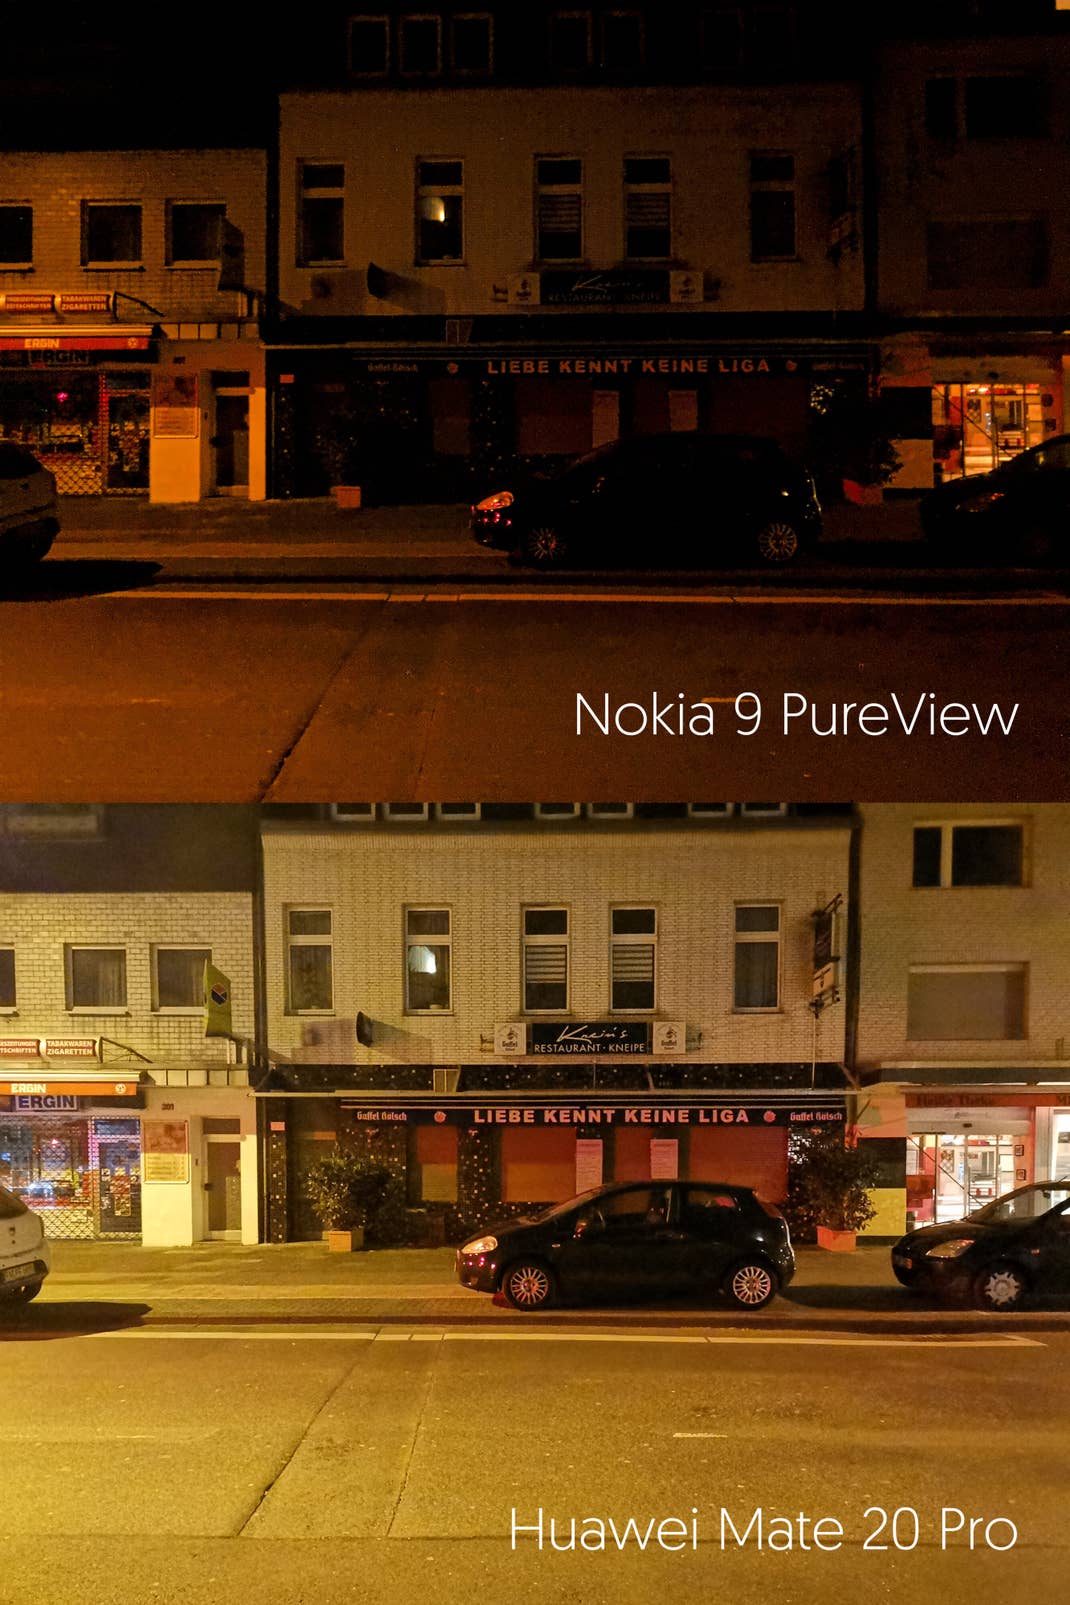 Nachtaufnahme: Vergleich Nokia 9 PureView vs. Huawei Mate 20 Pro